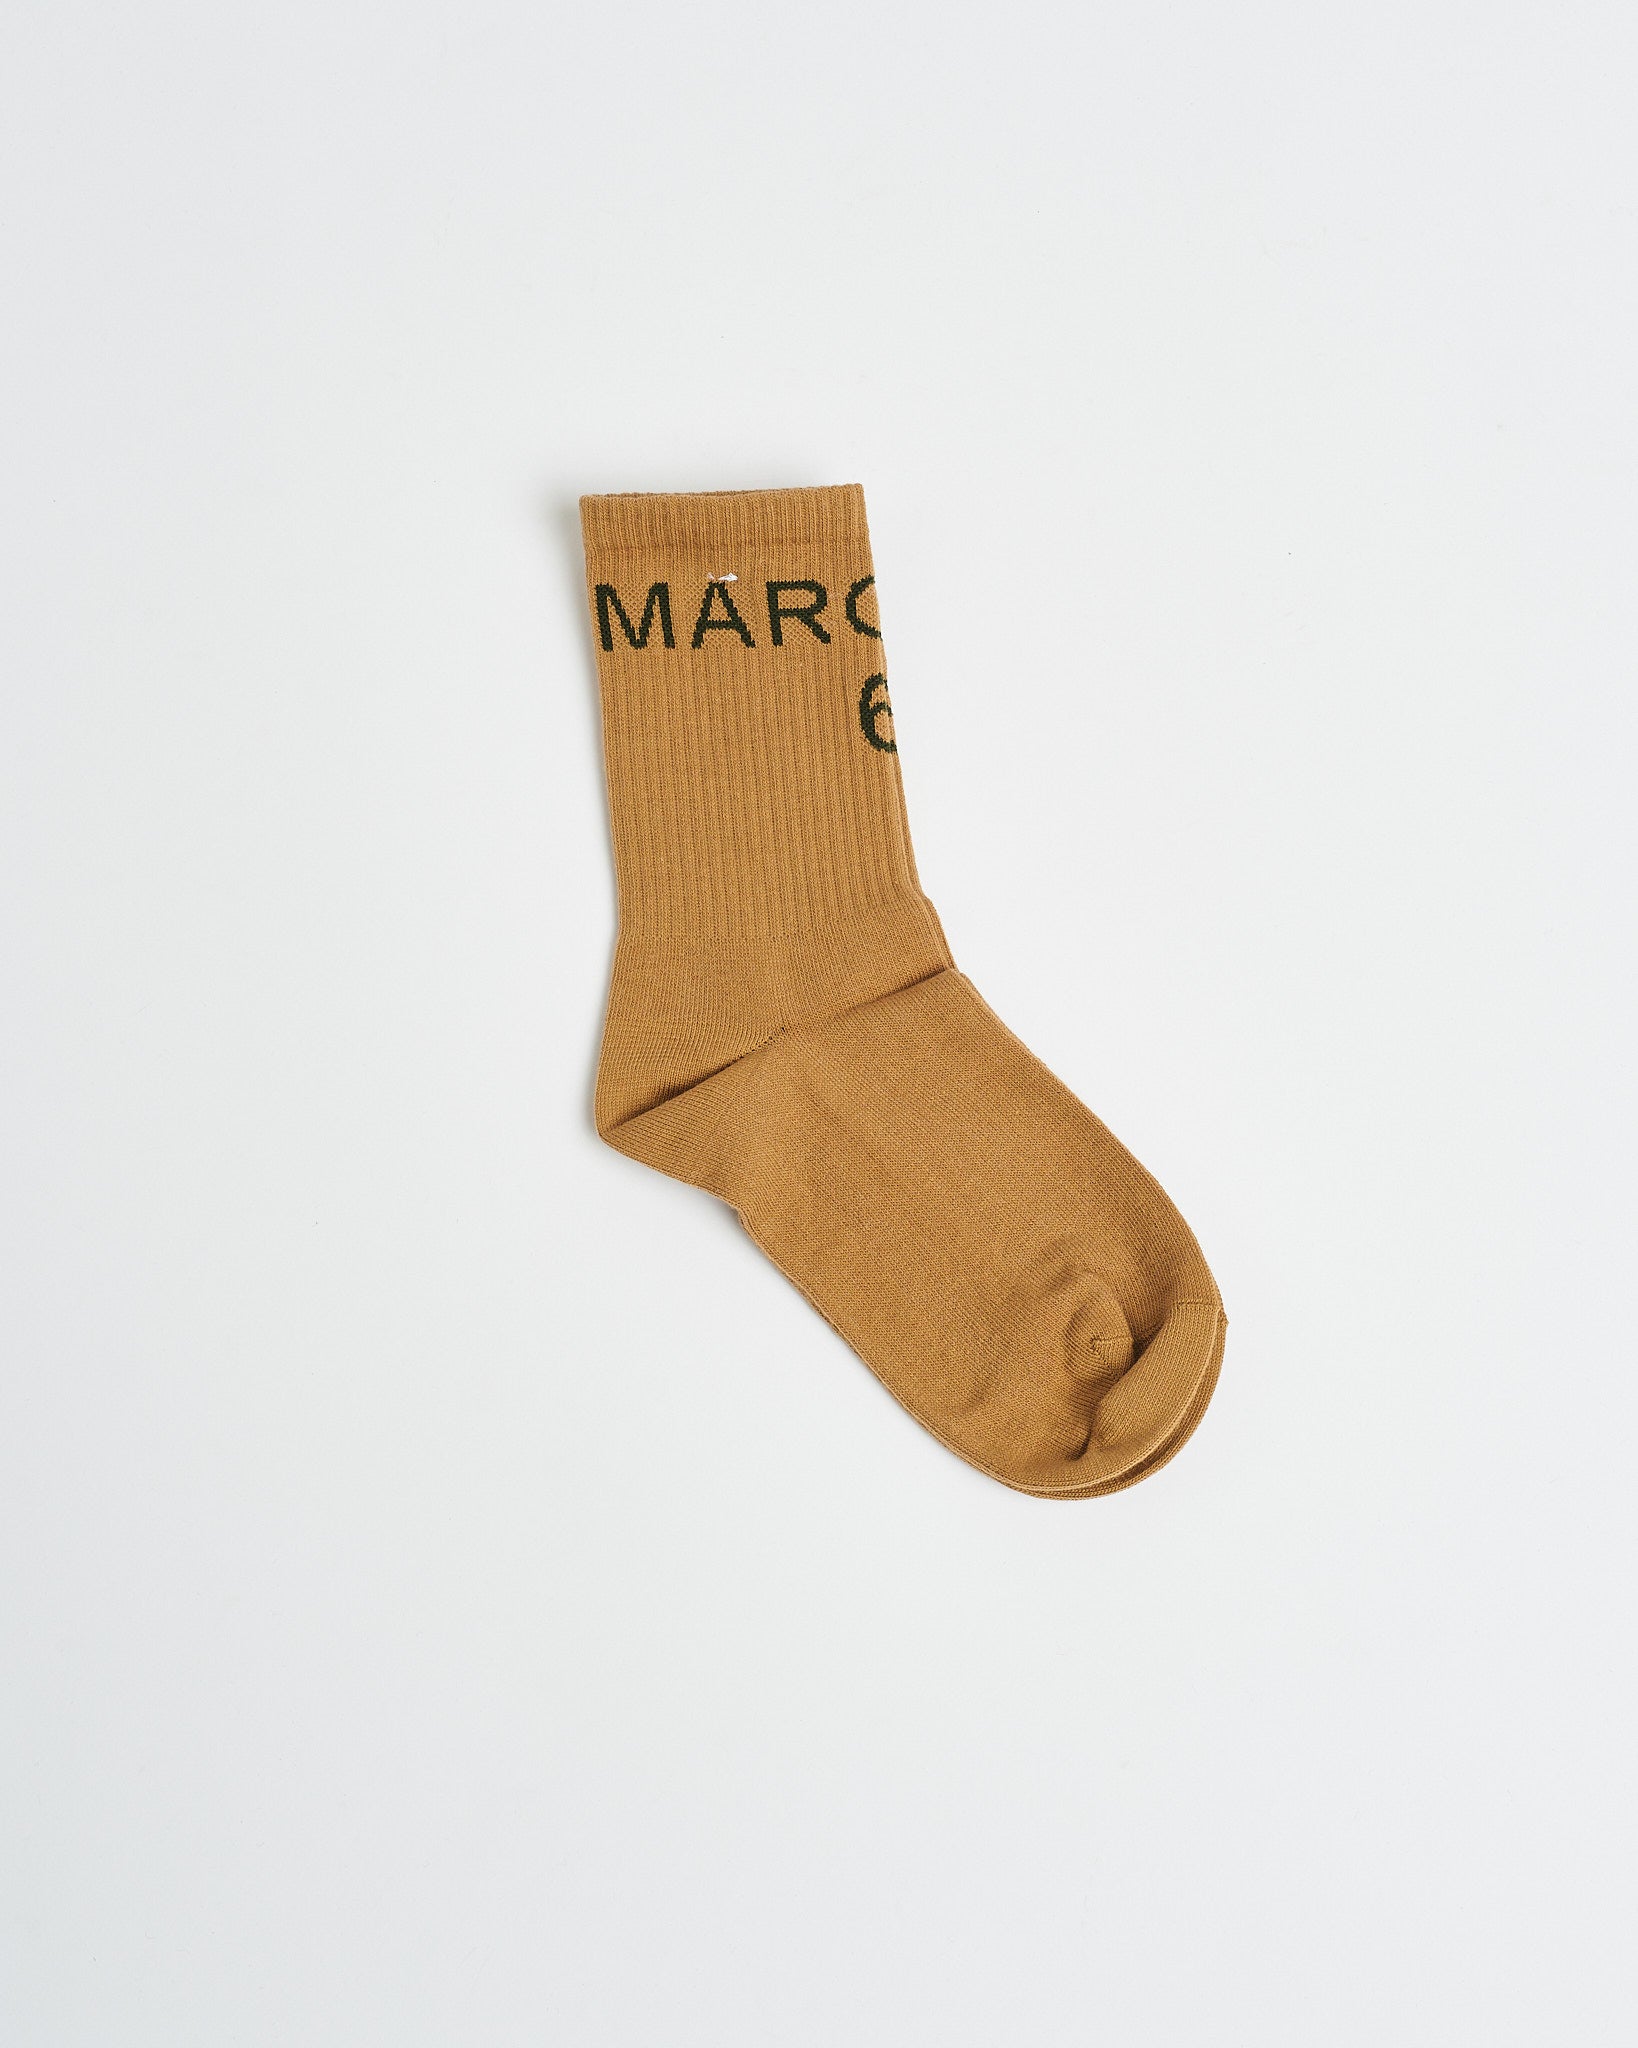 Bootleg Socks in Beige/Khaki